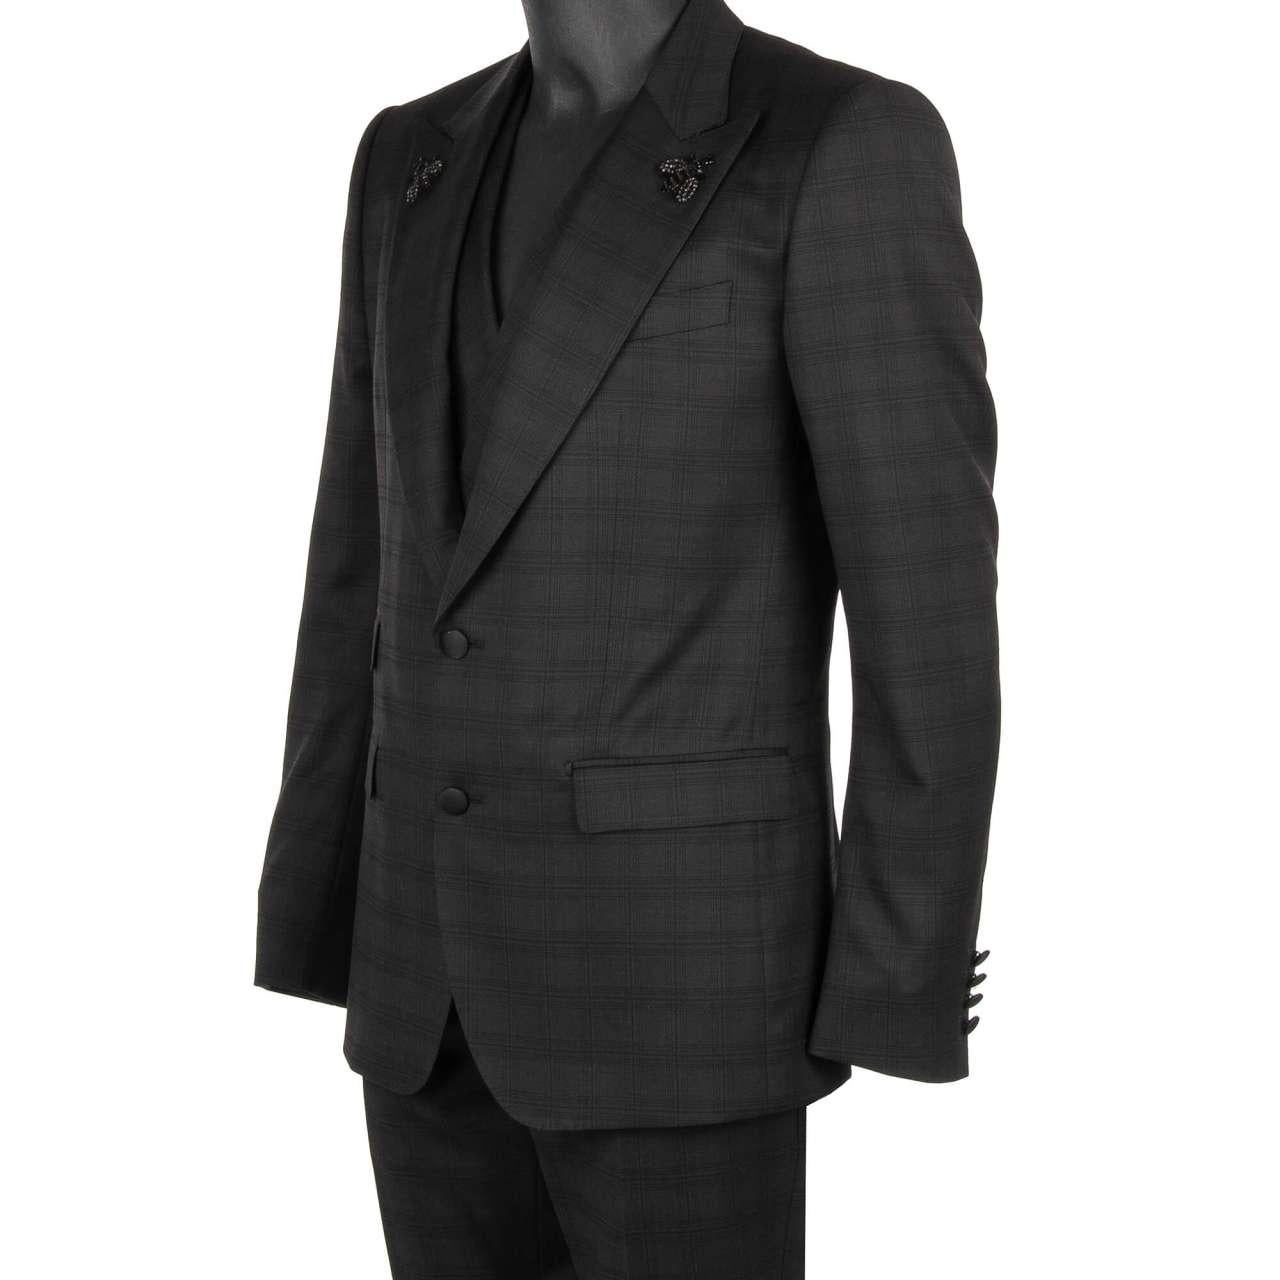 D&G 3 Piece Checked Suit Jacket Waistcoat Bee Brooch SICILIA Black 52 In Excellent Condition For Sale In Erkrath, DE